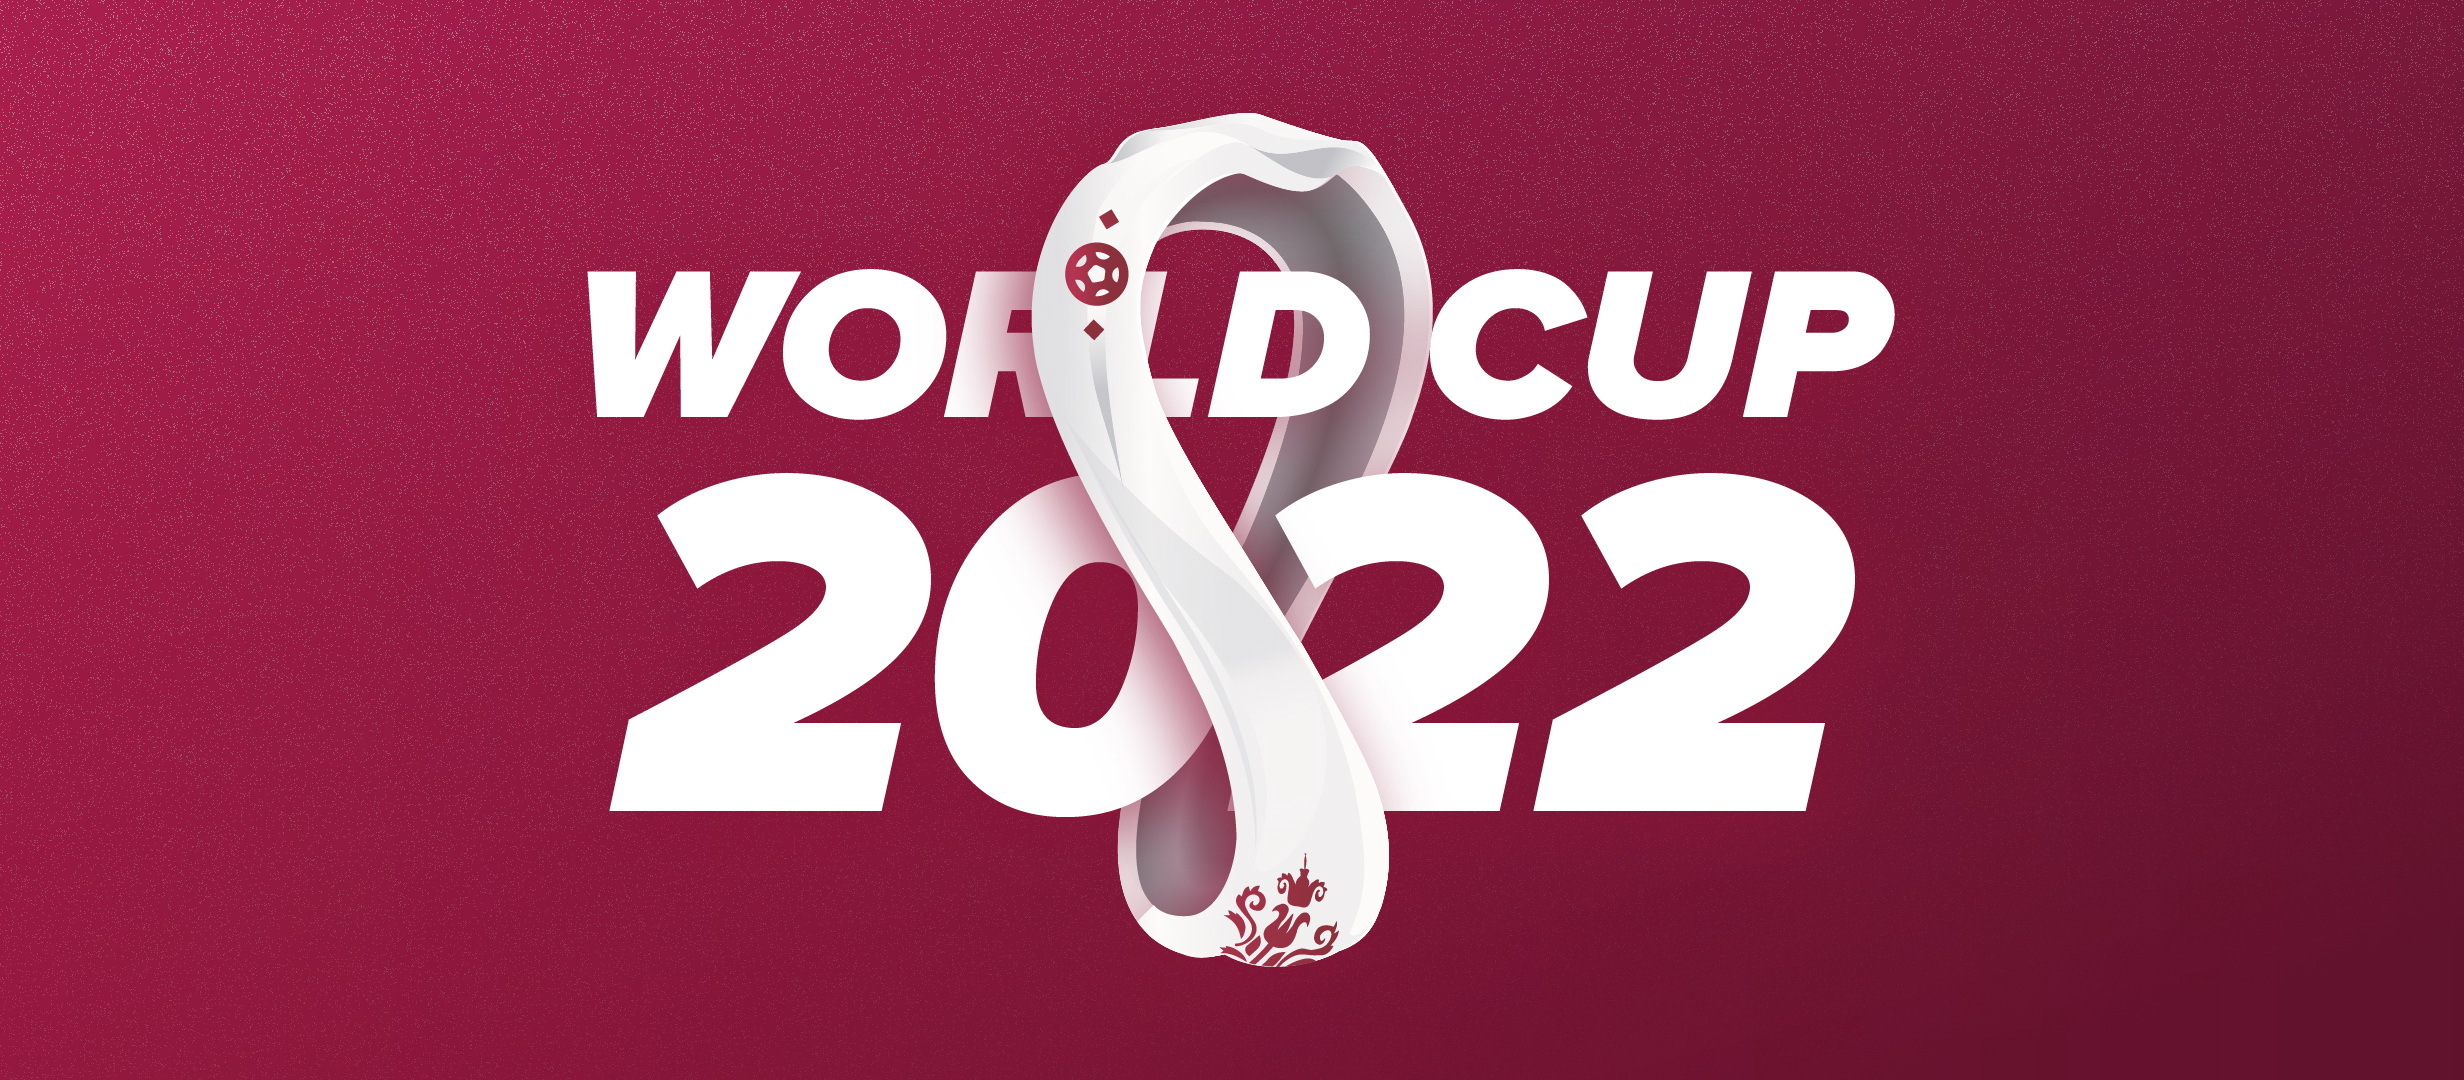 Bonusuri si promotii World Cup 2022